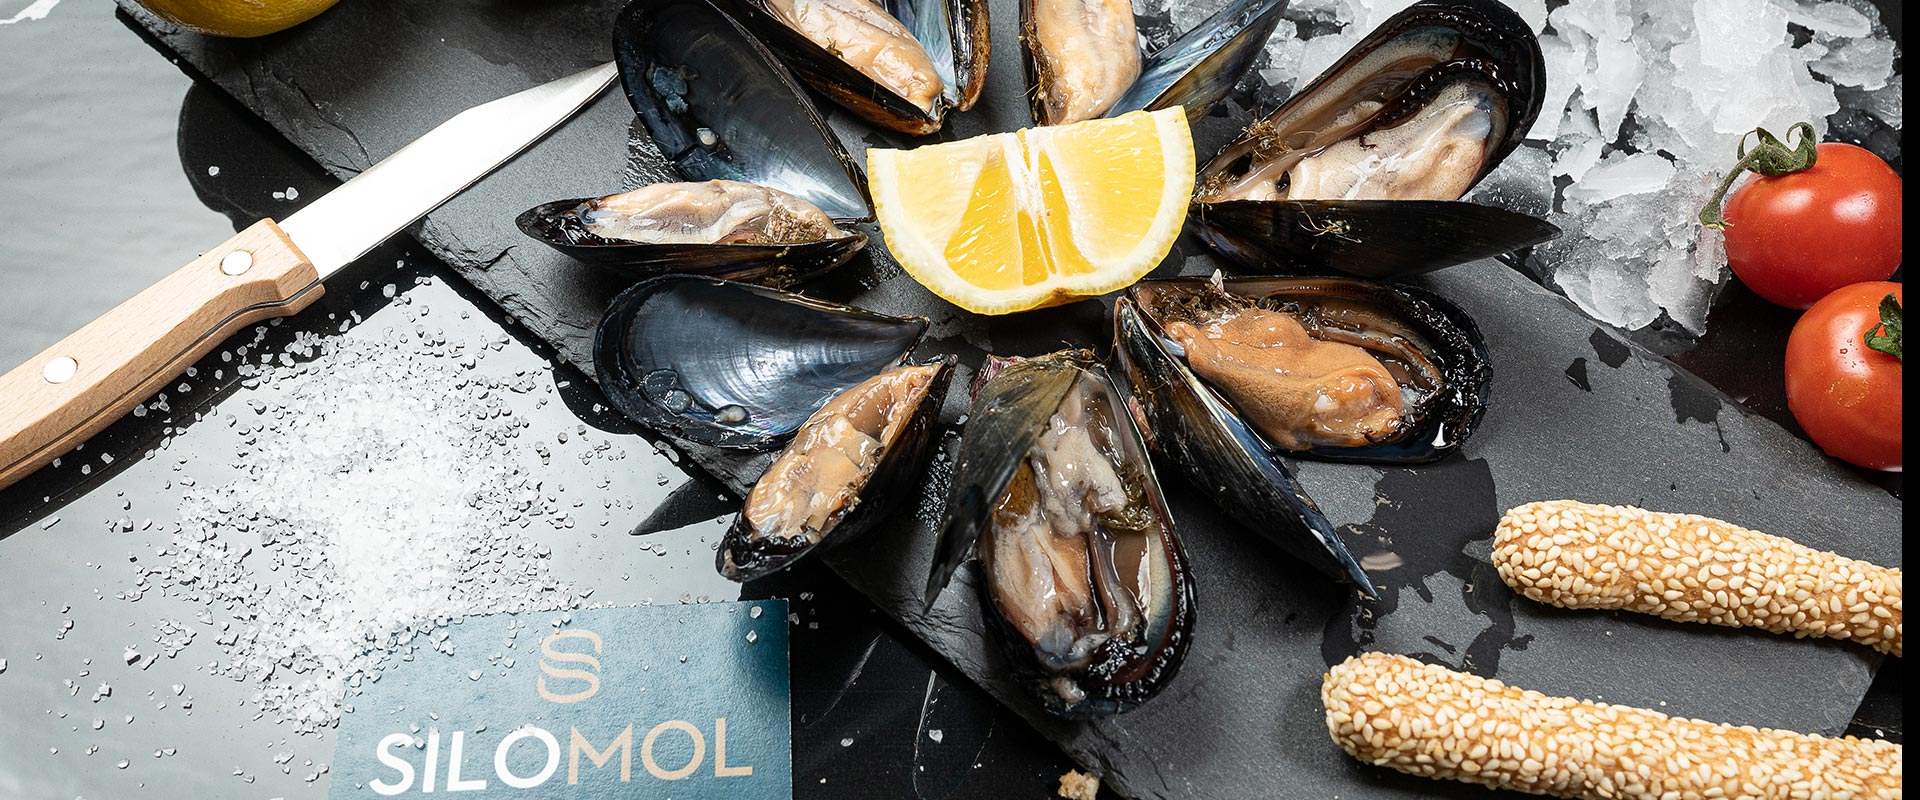 Mussels and Shellfish - Silomol